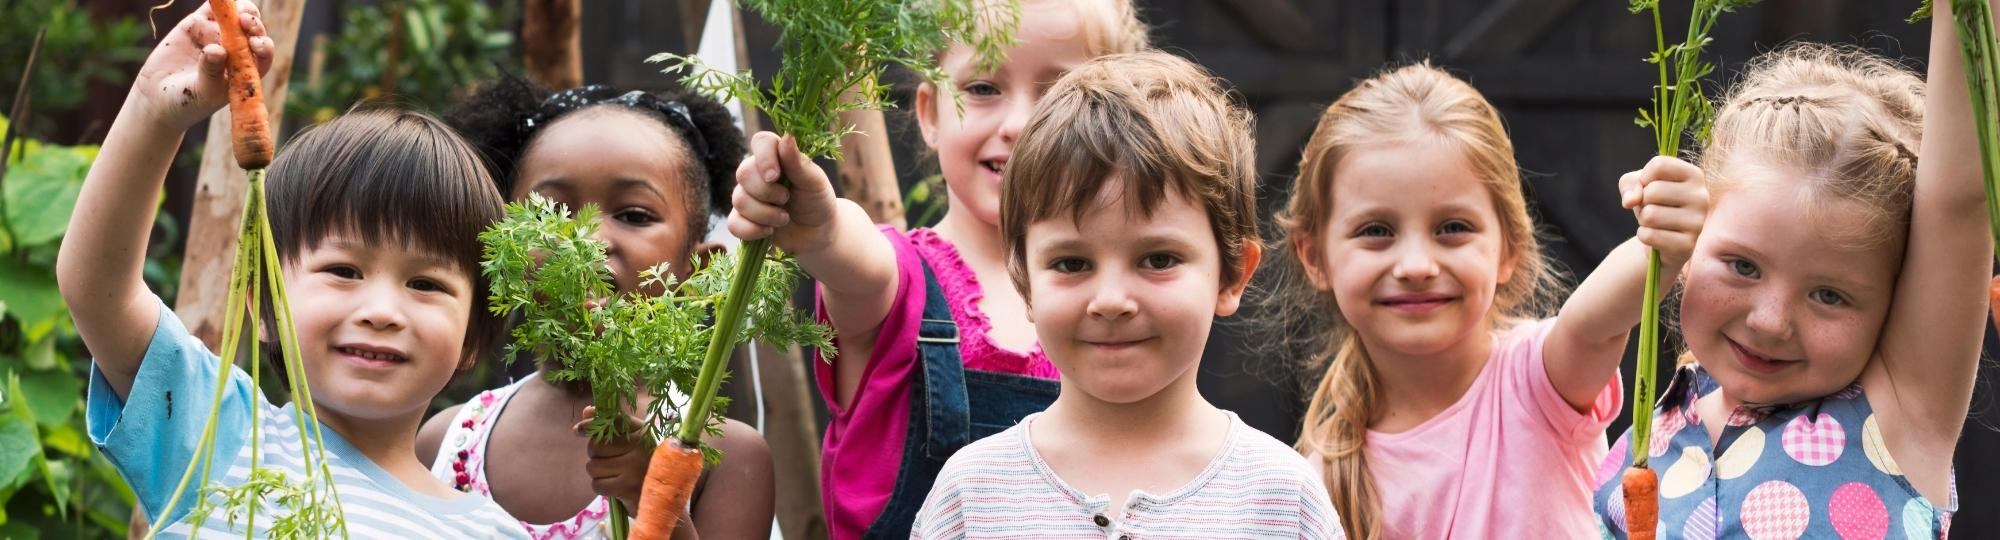 Group of children holding up garden vegetables